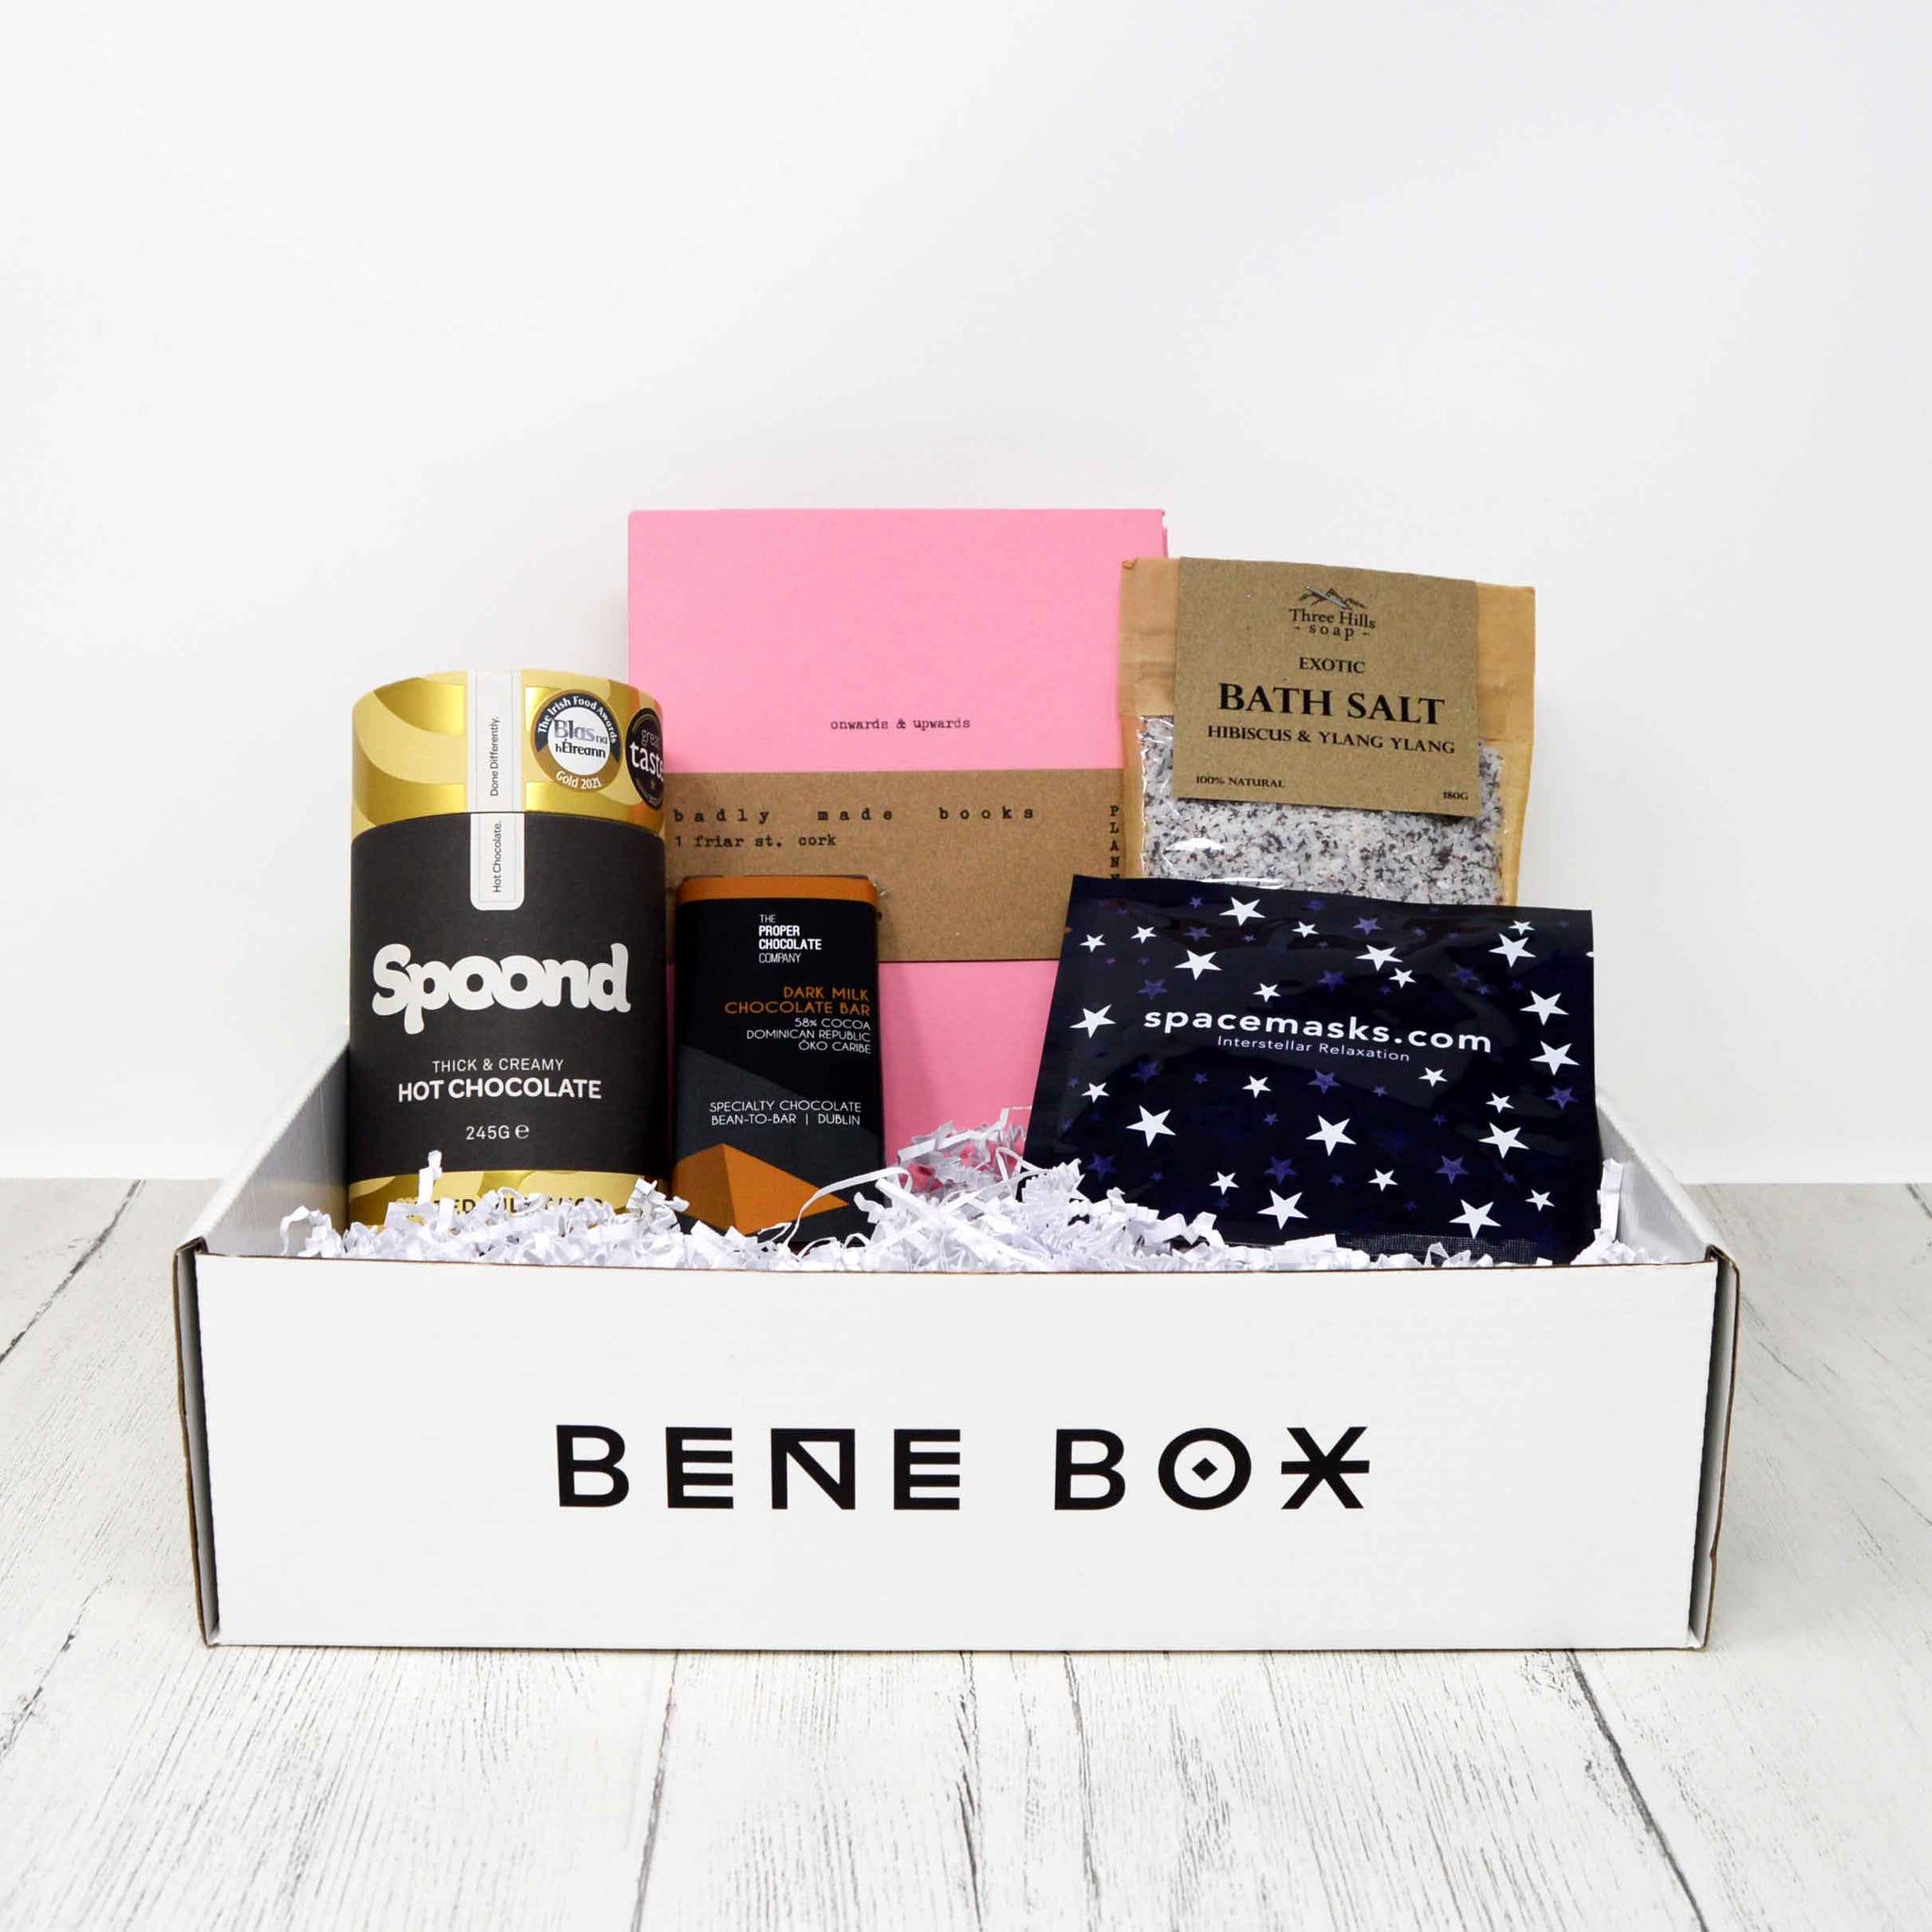 Take 5 Care Package Ireland - Bene Box